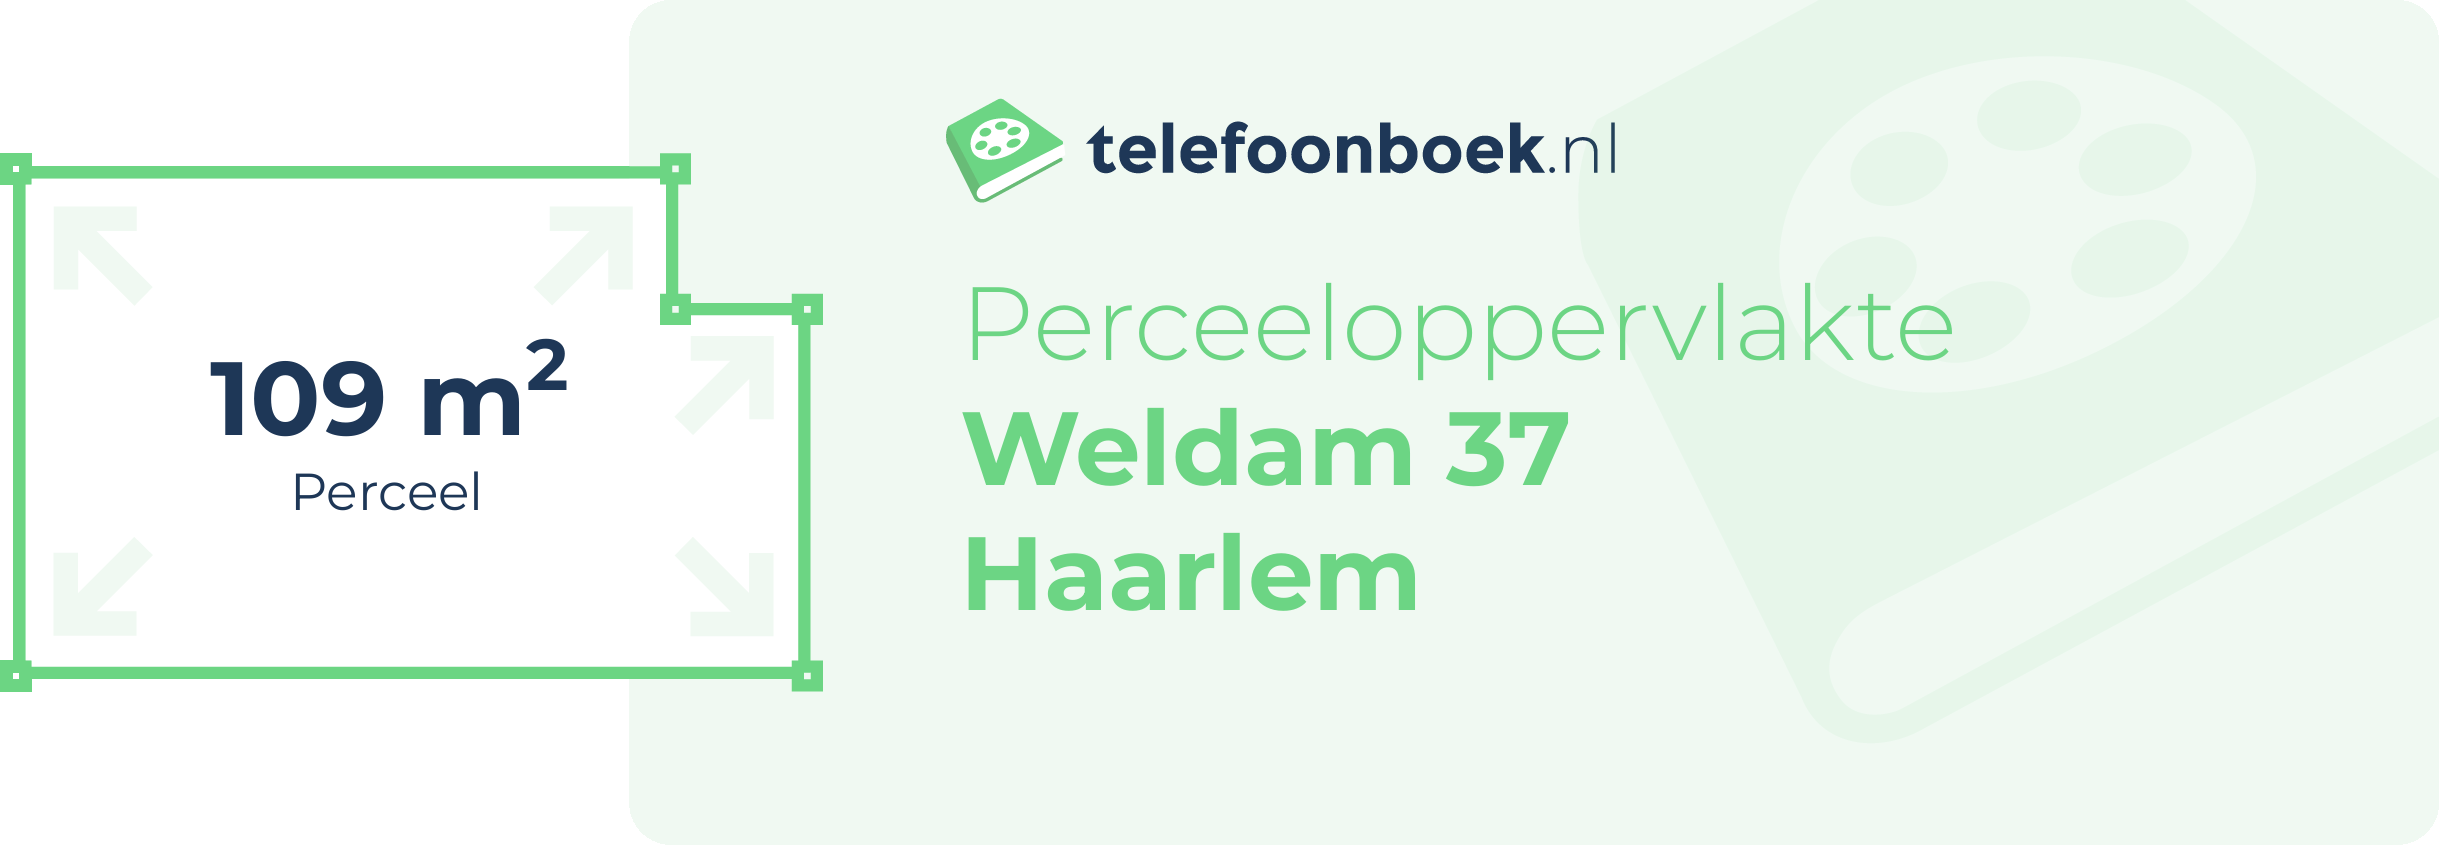 Perceeloppervlakte Weldam 37 Haarlem